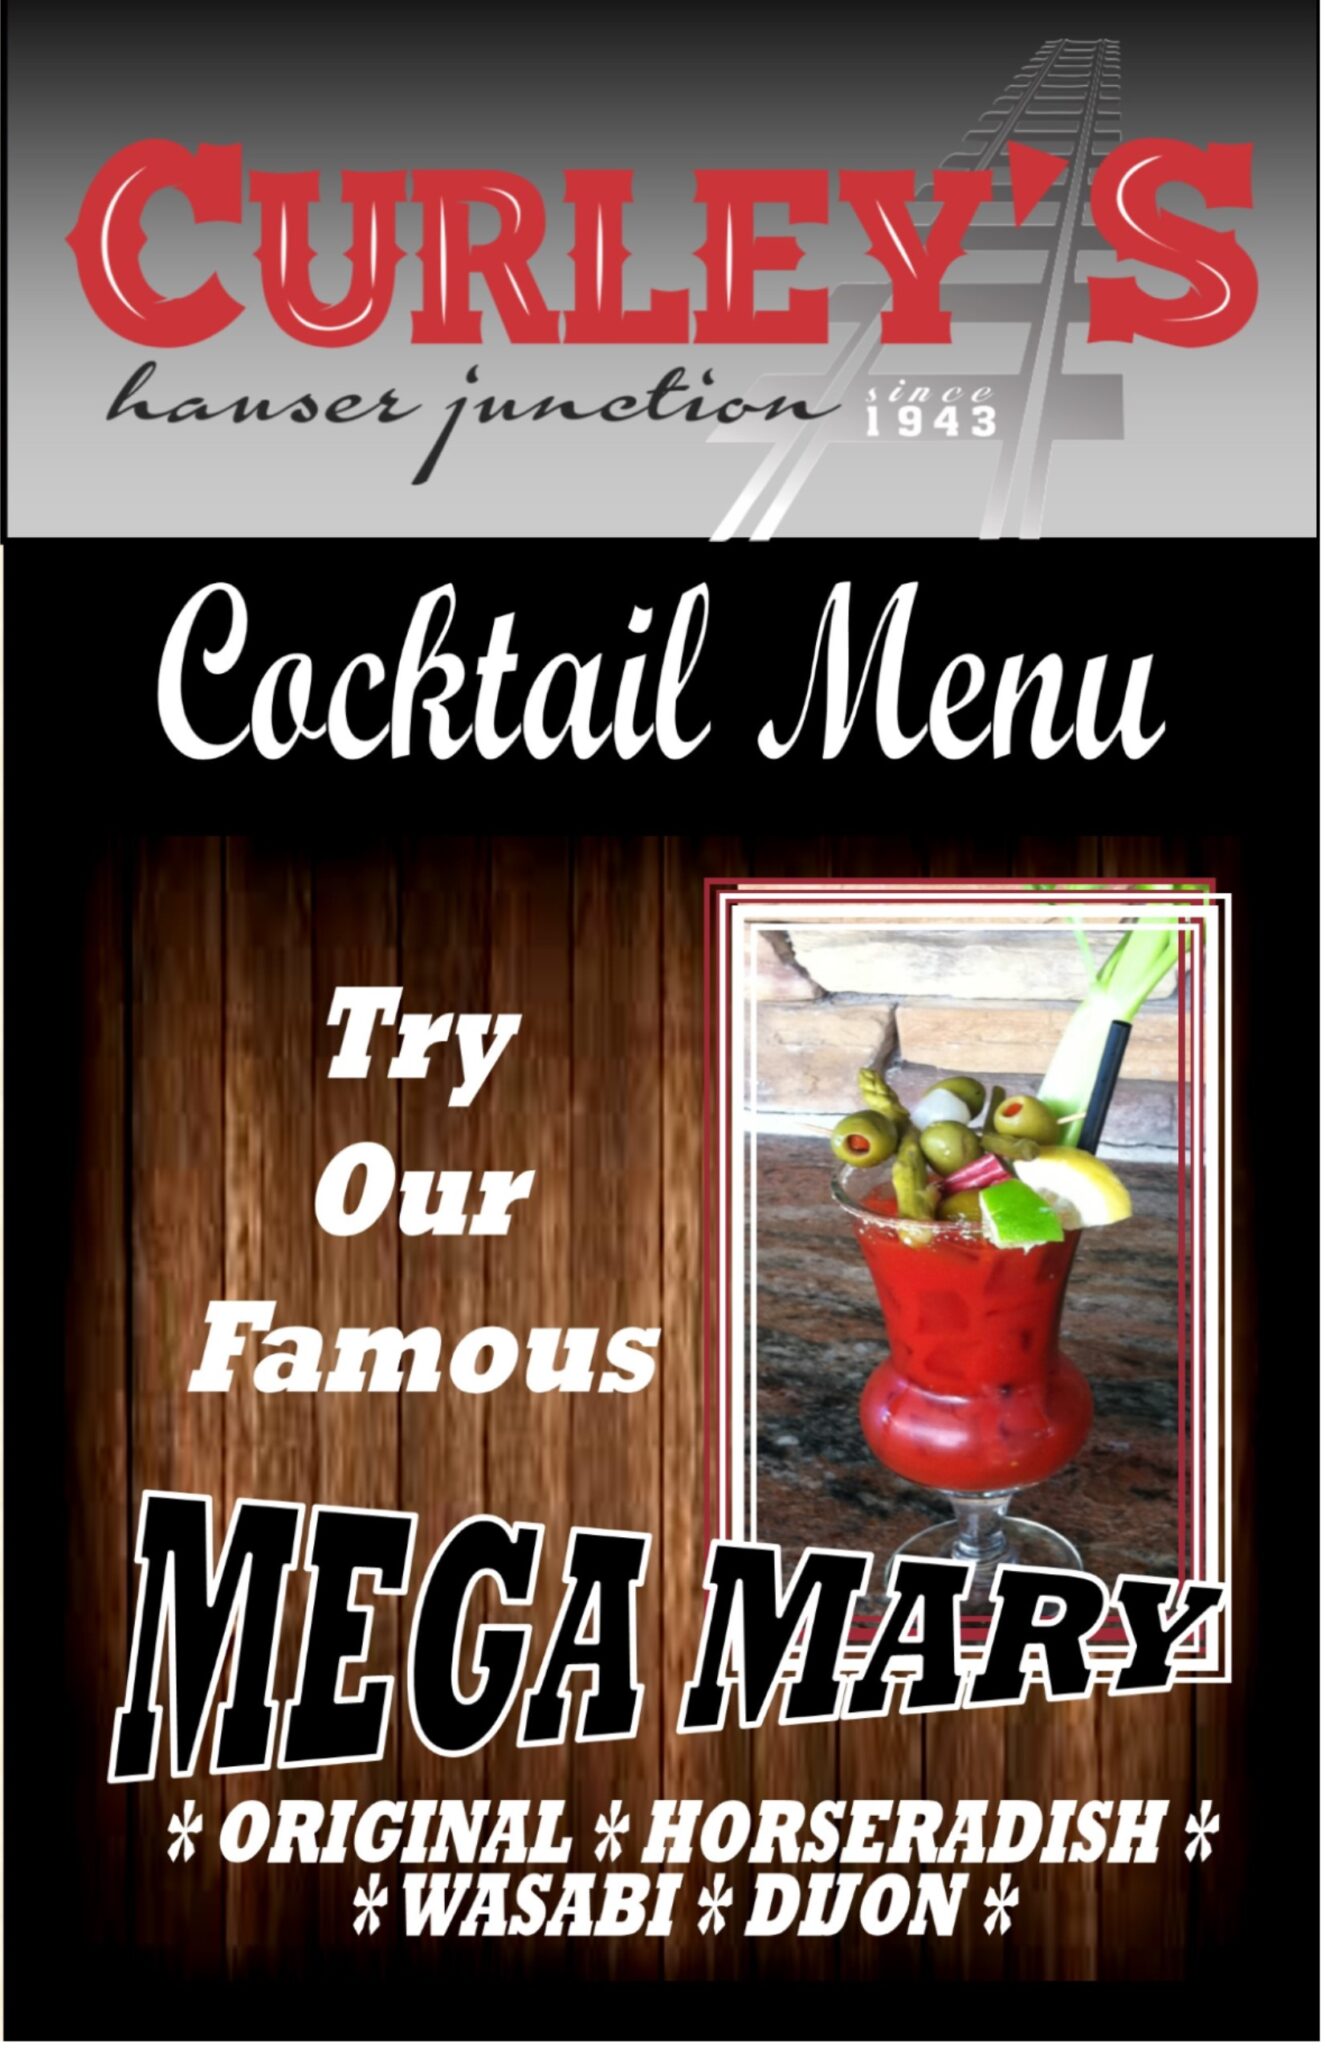 Cocktail Menu | Curley's bar in Post Falls, Idaho